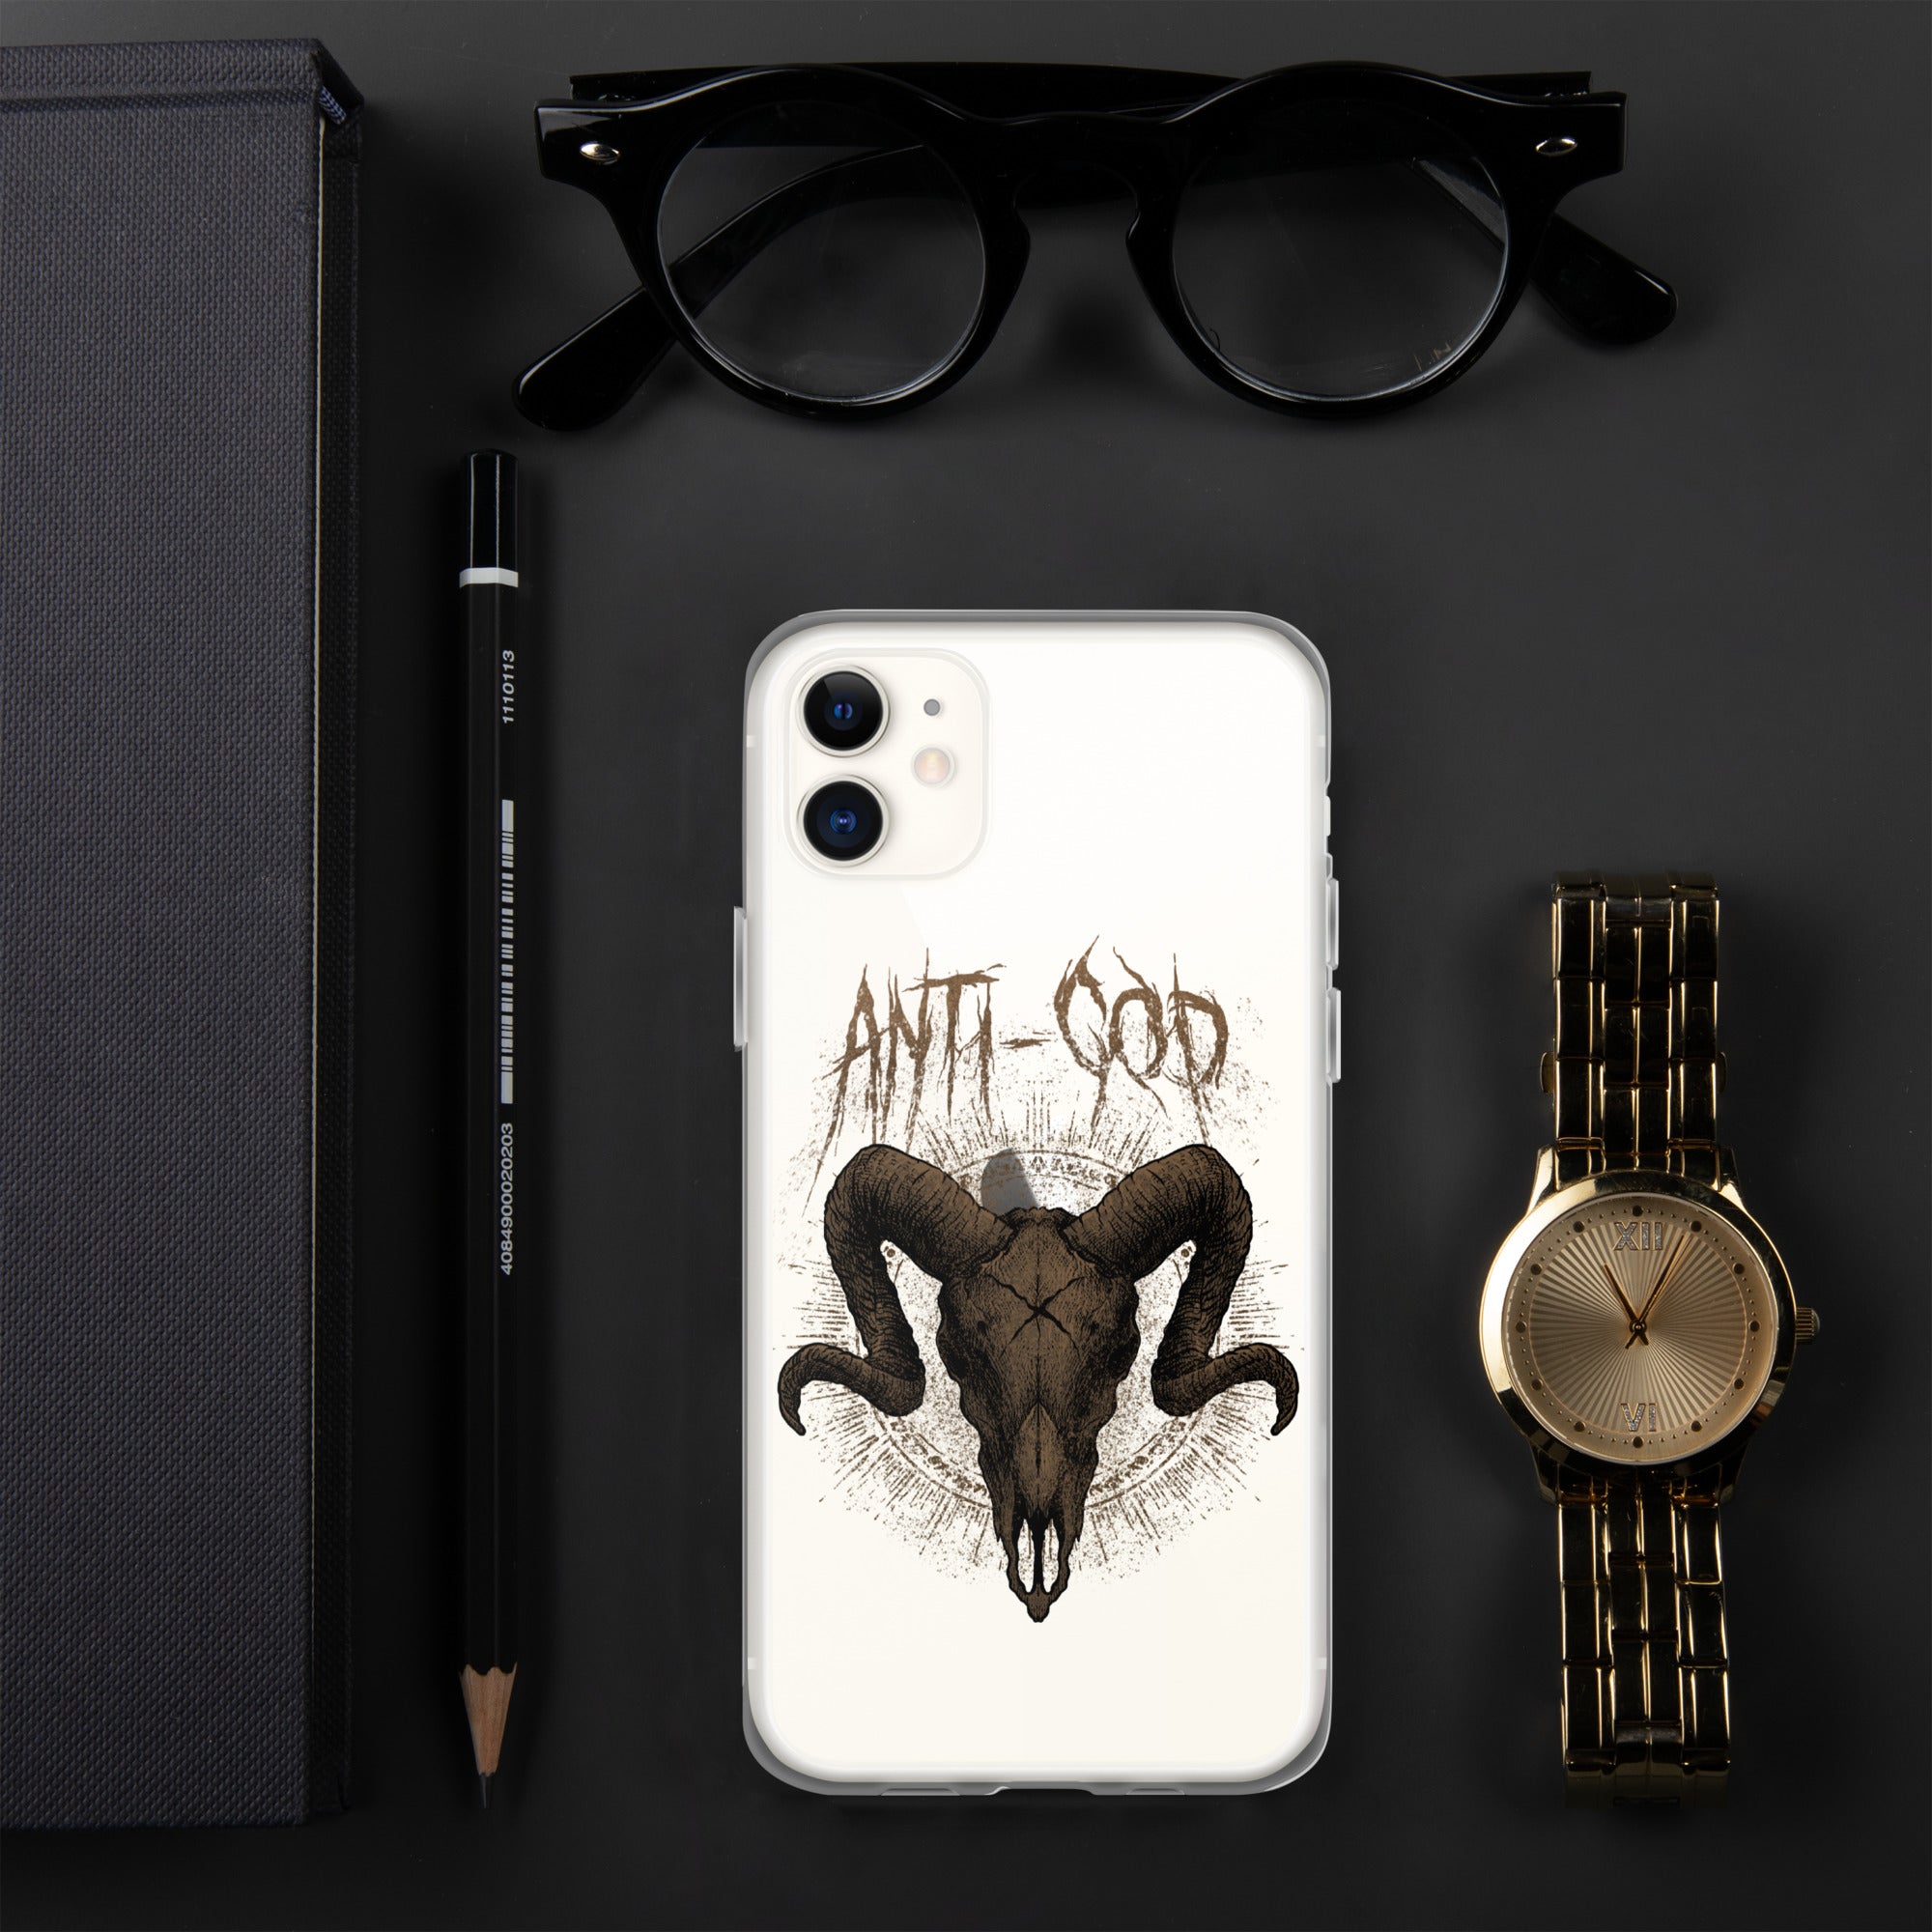 ANTI-GOD iPhone Case